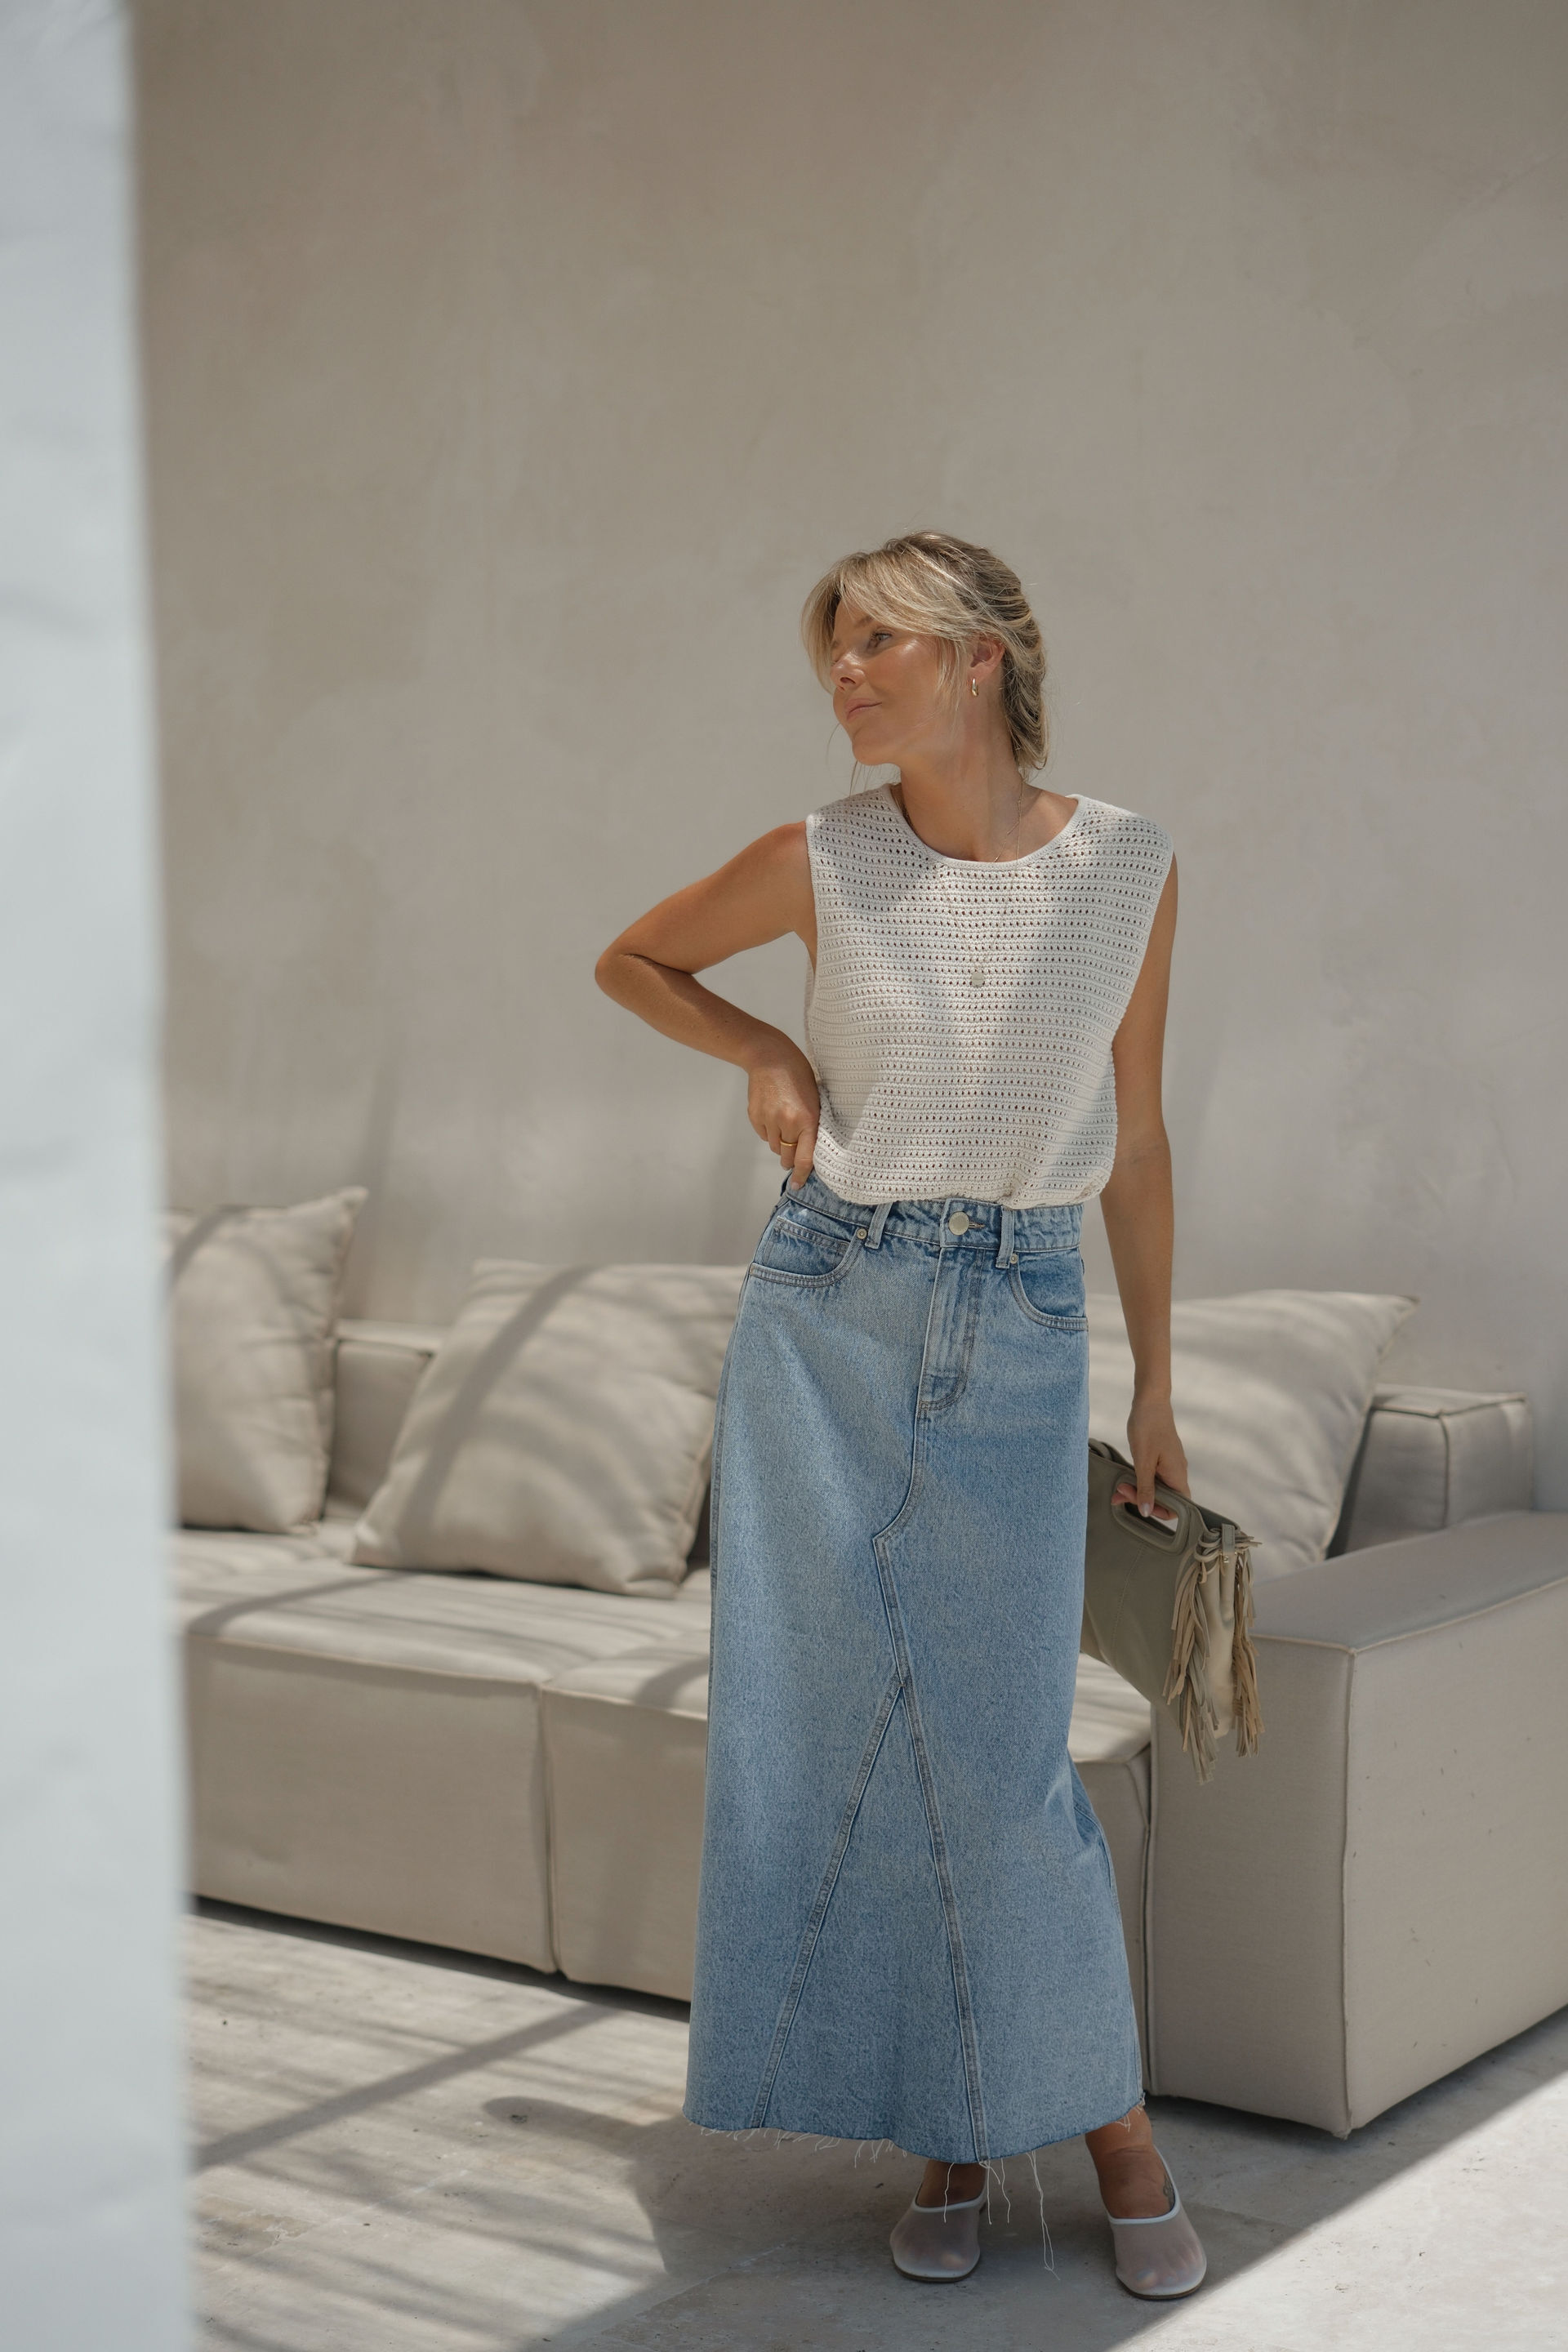 How to Style the Trending Denim Maxi Skirt for 2023?